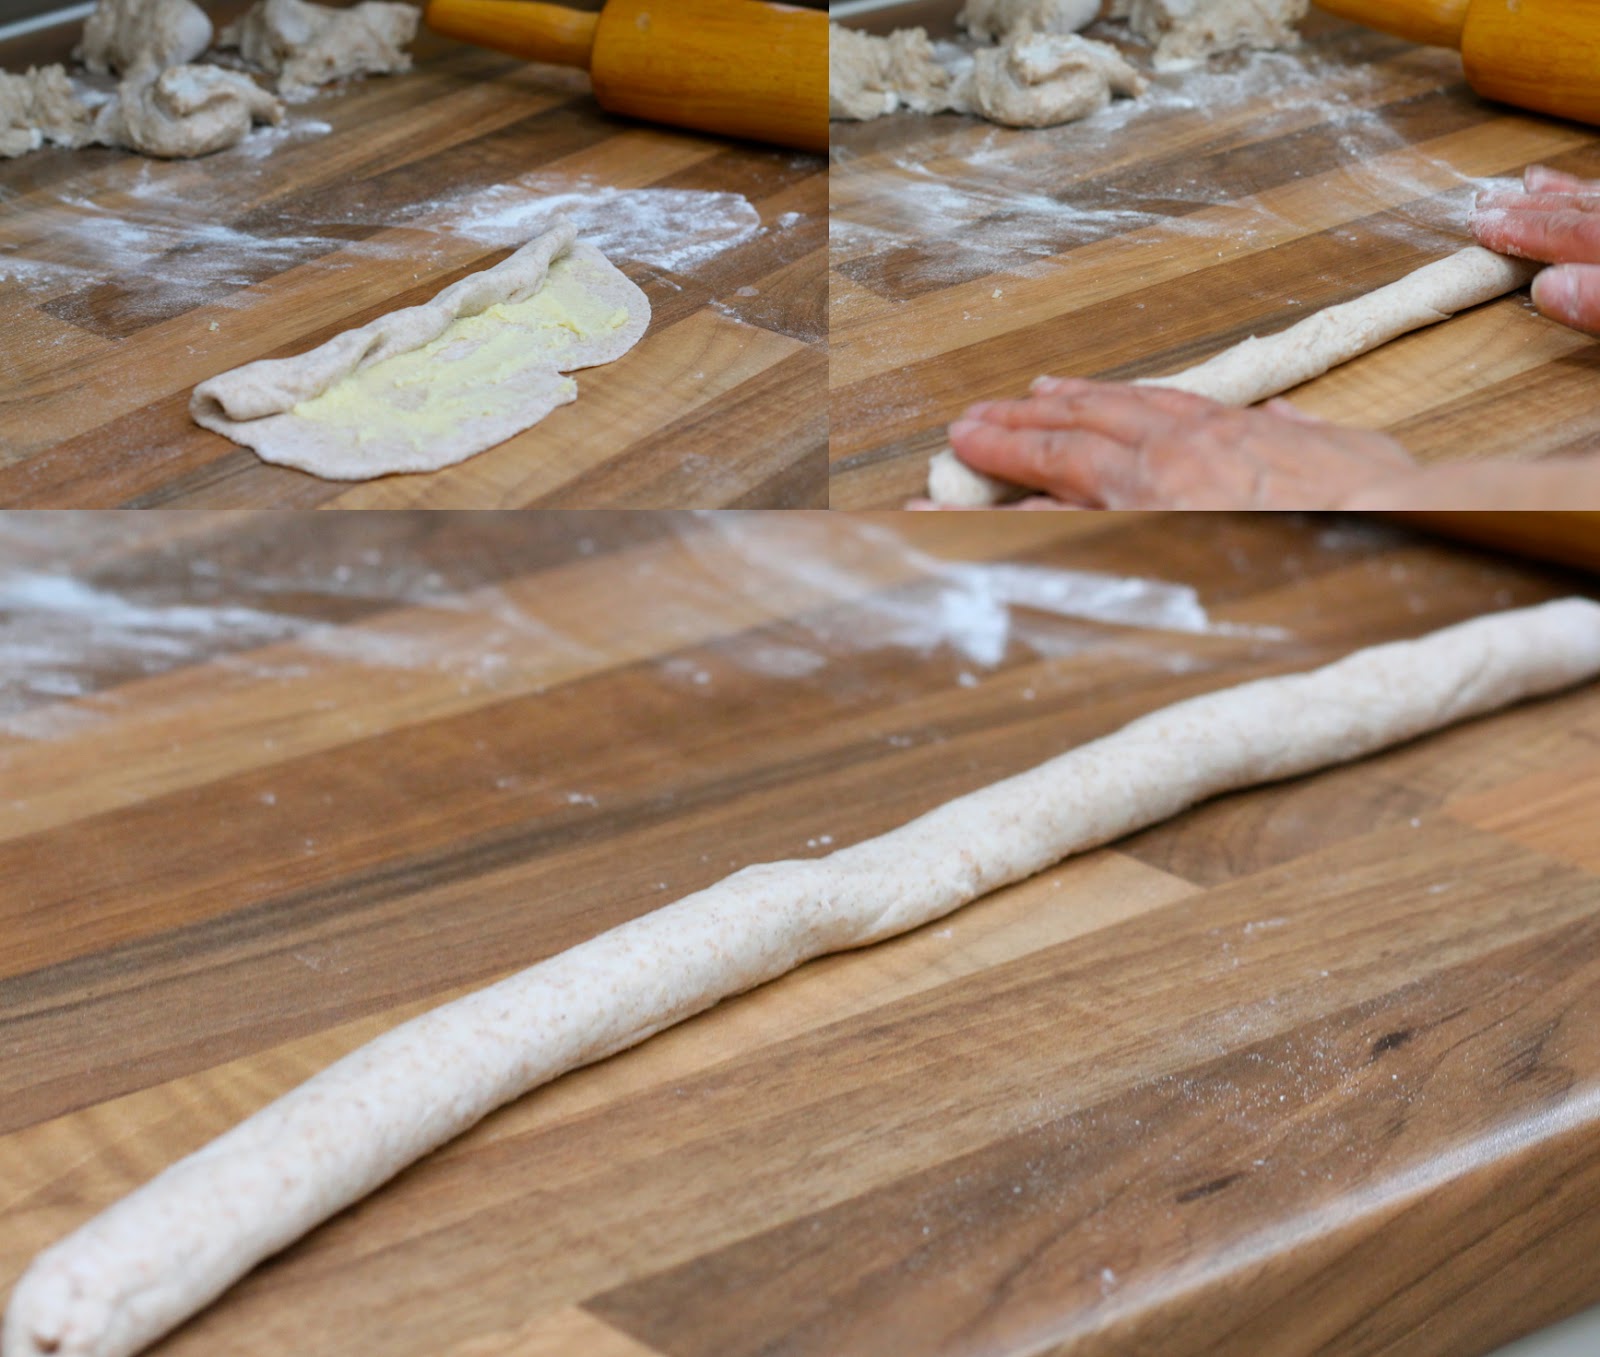 Rolling paratha dough